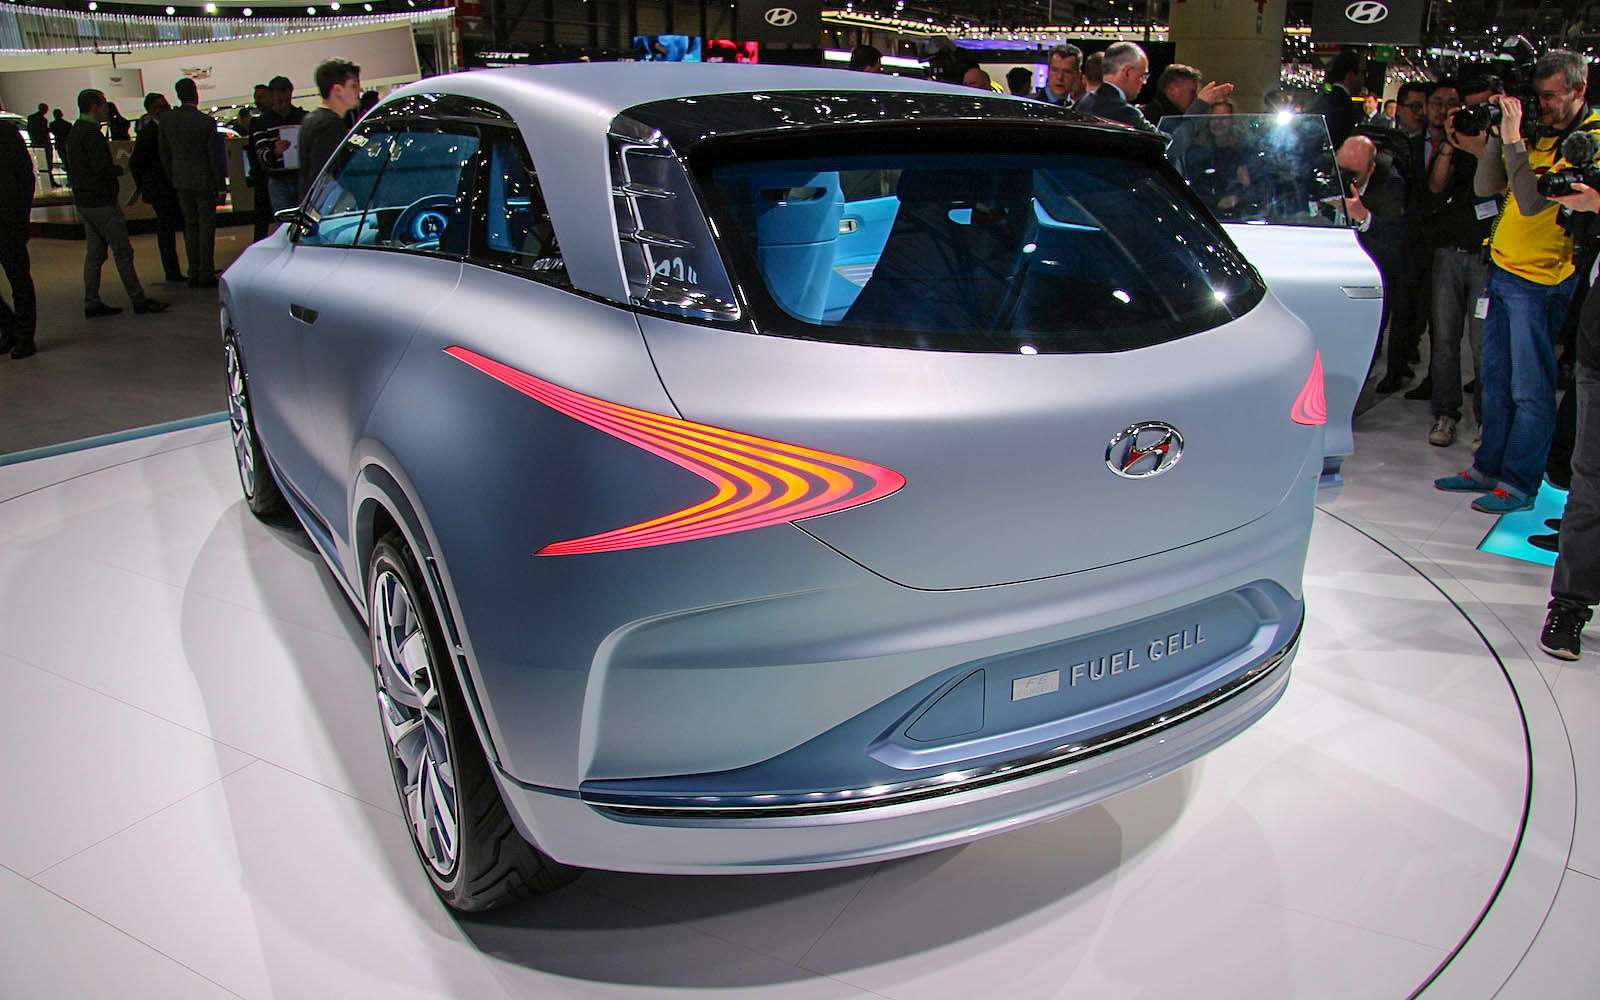 Габариты Hyundai FE Fuel Cell — как у кроссовера С-сегмента.